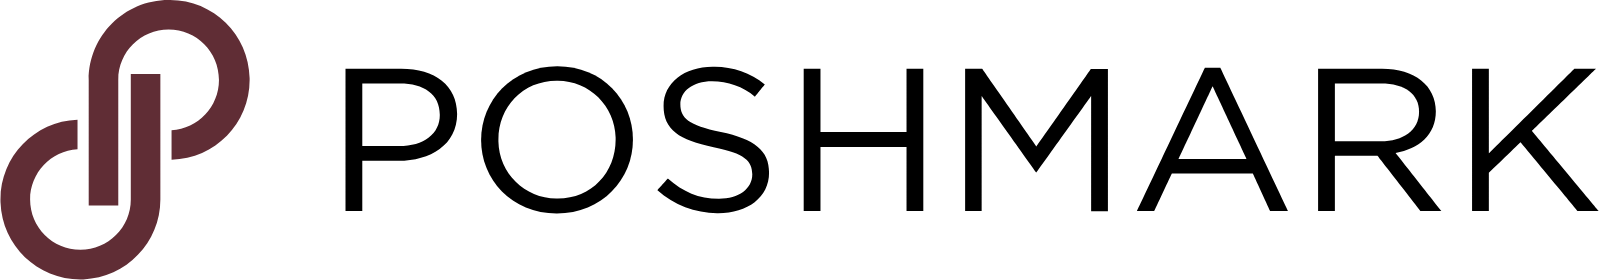 Poshmark logo large (transparent PNG)